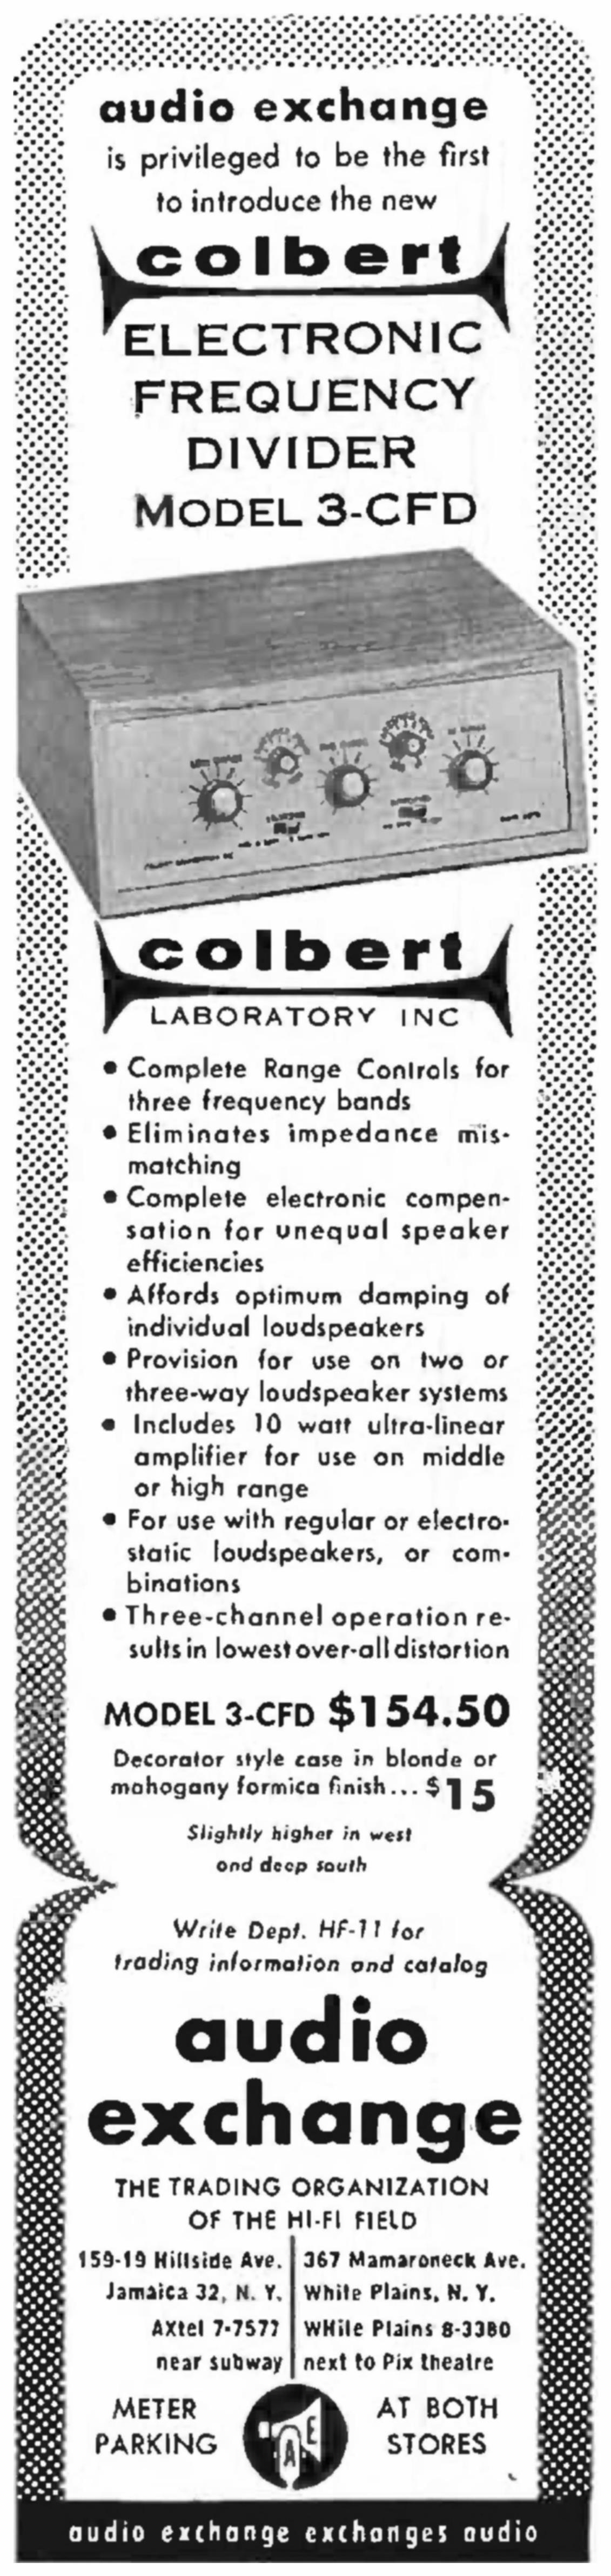 Audio Exchange 1956 1.jpg